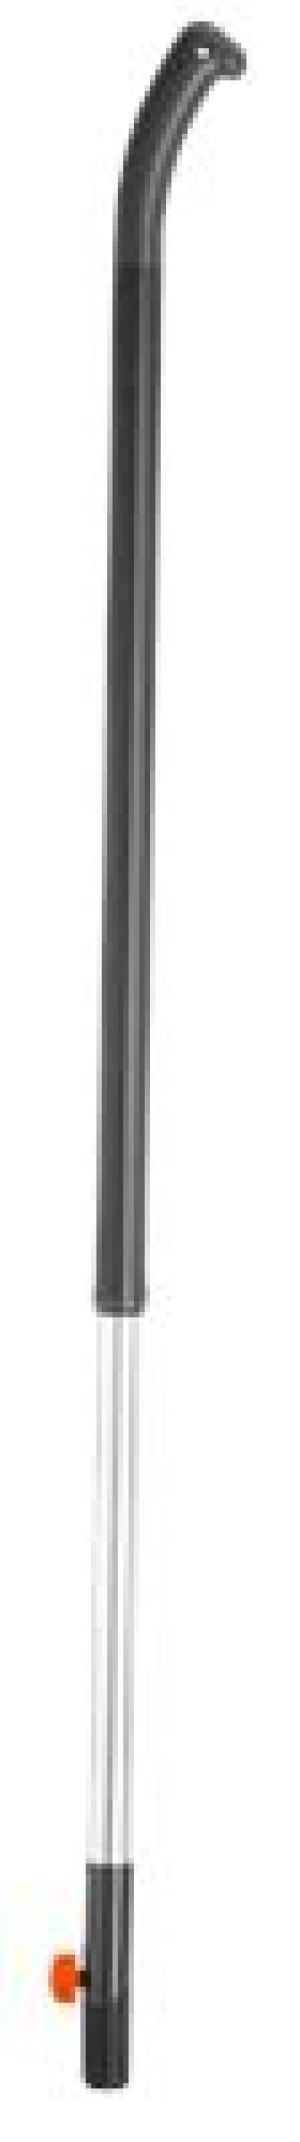 Gardena Trzonek aluminiowy Ergoline Combisystem 130 cm 03734-20 1